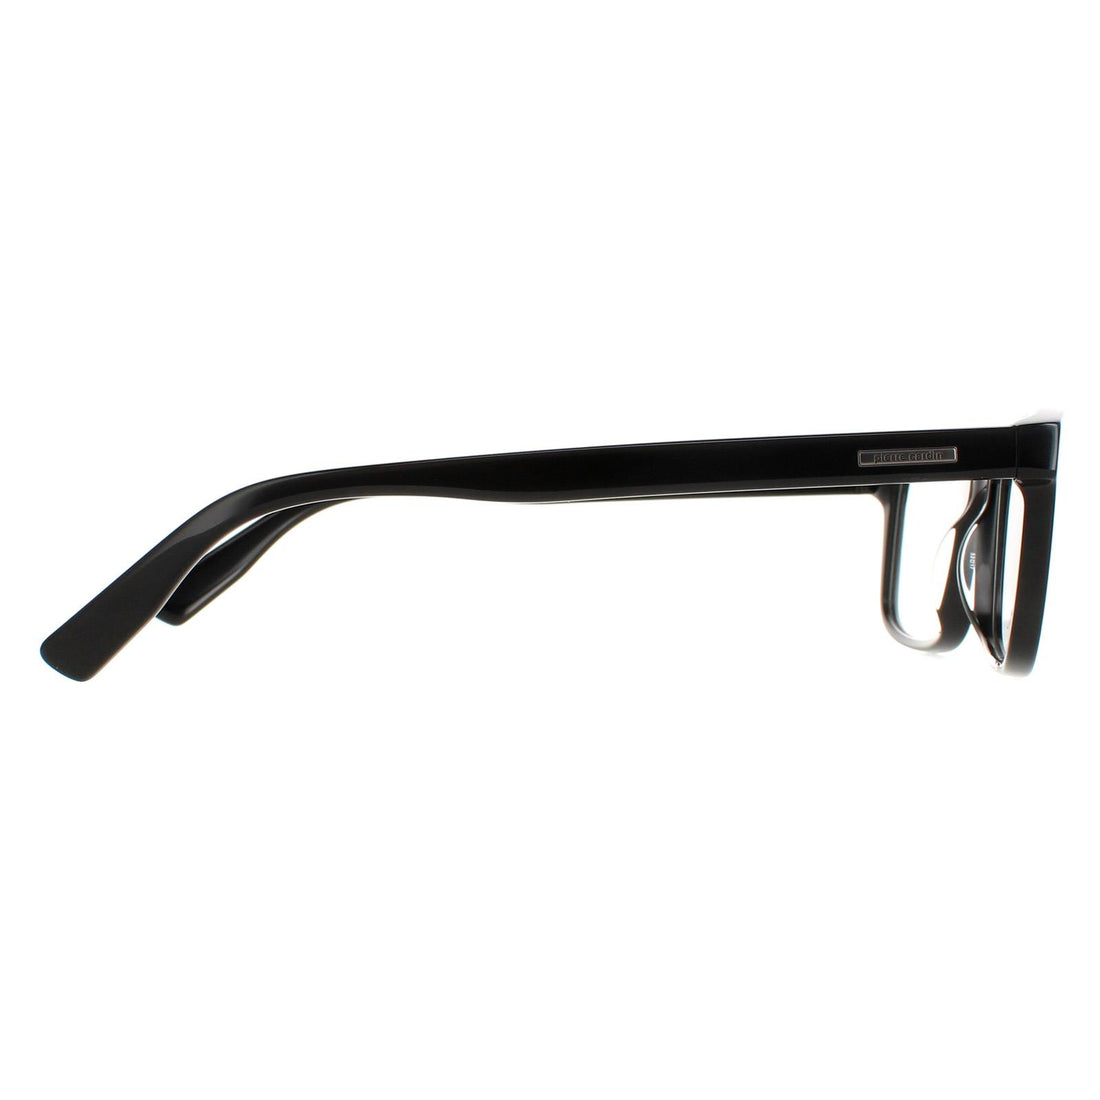 Pierre Cardin Glasses Frames P.C. 6186 807 Black Men